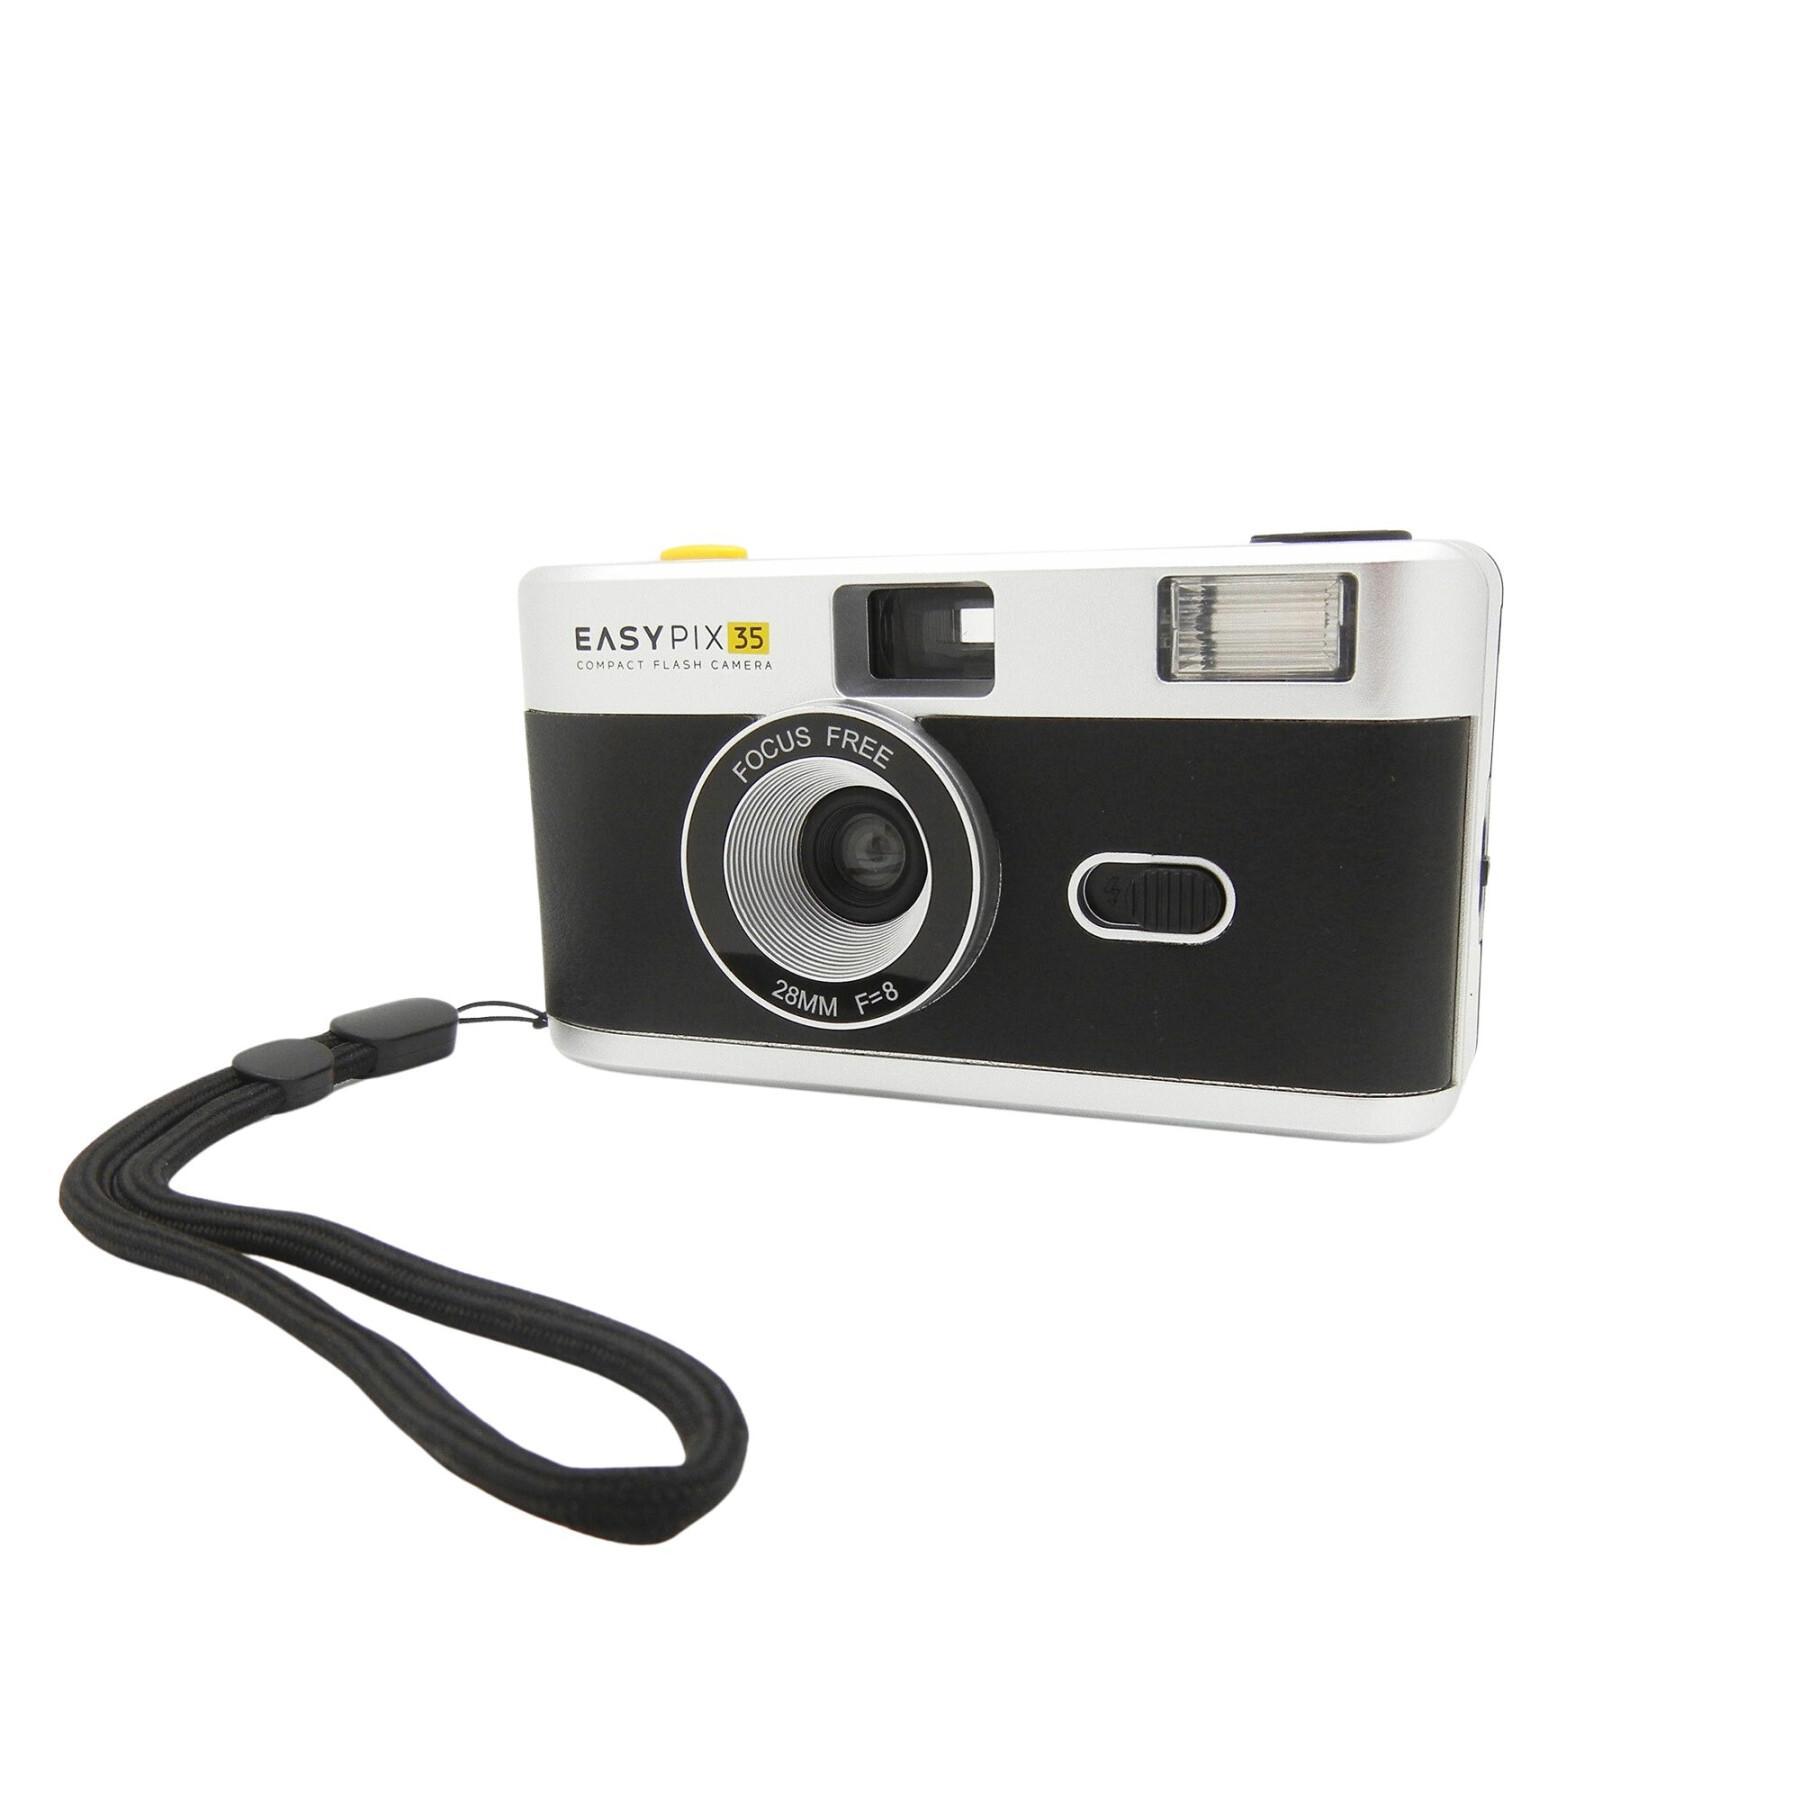 Analog camera Easypix 35 Analogue reuseable 35mm